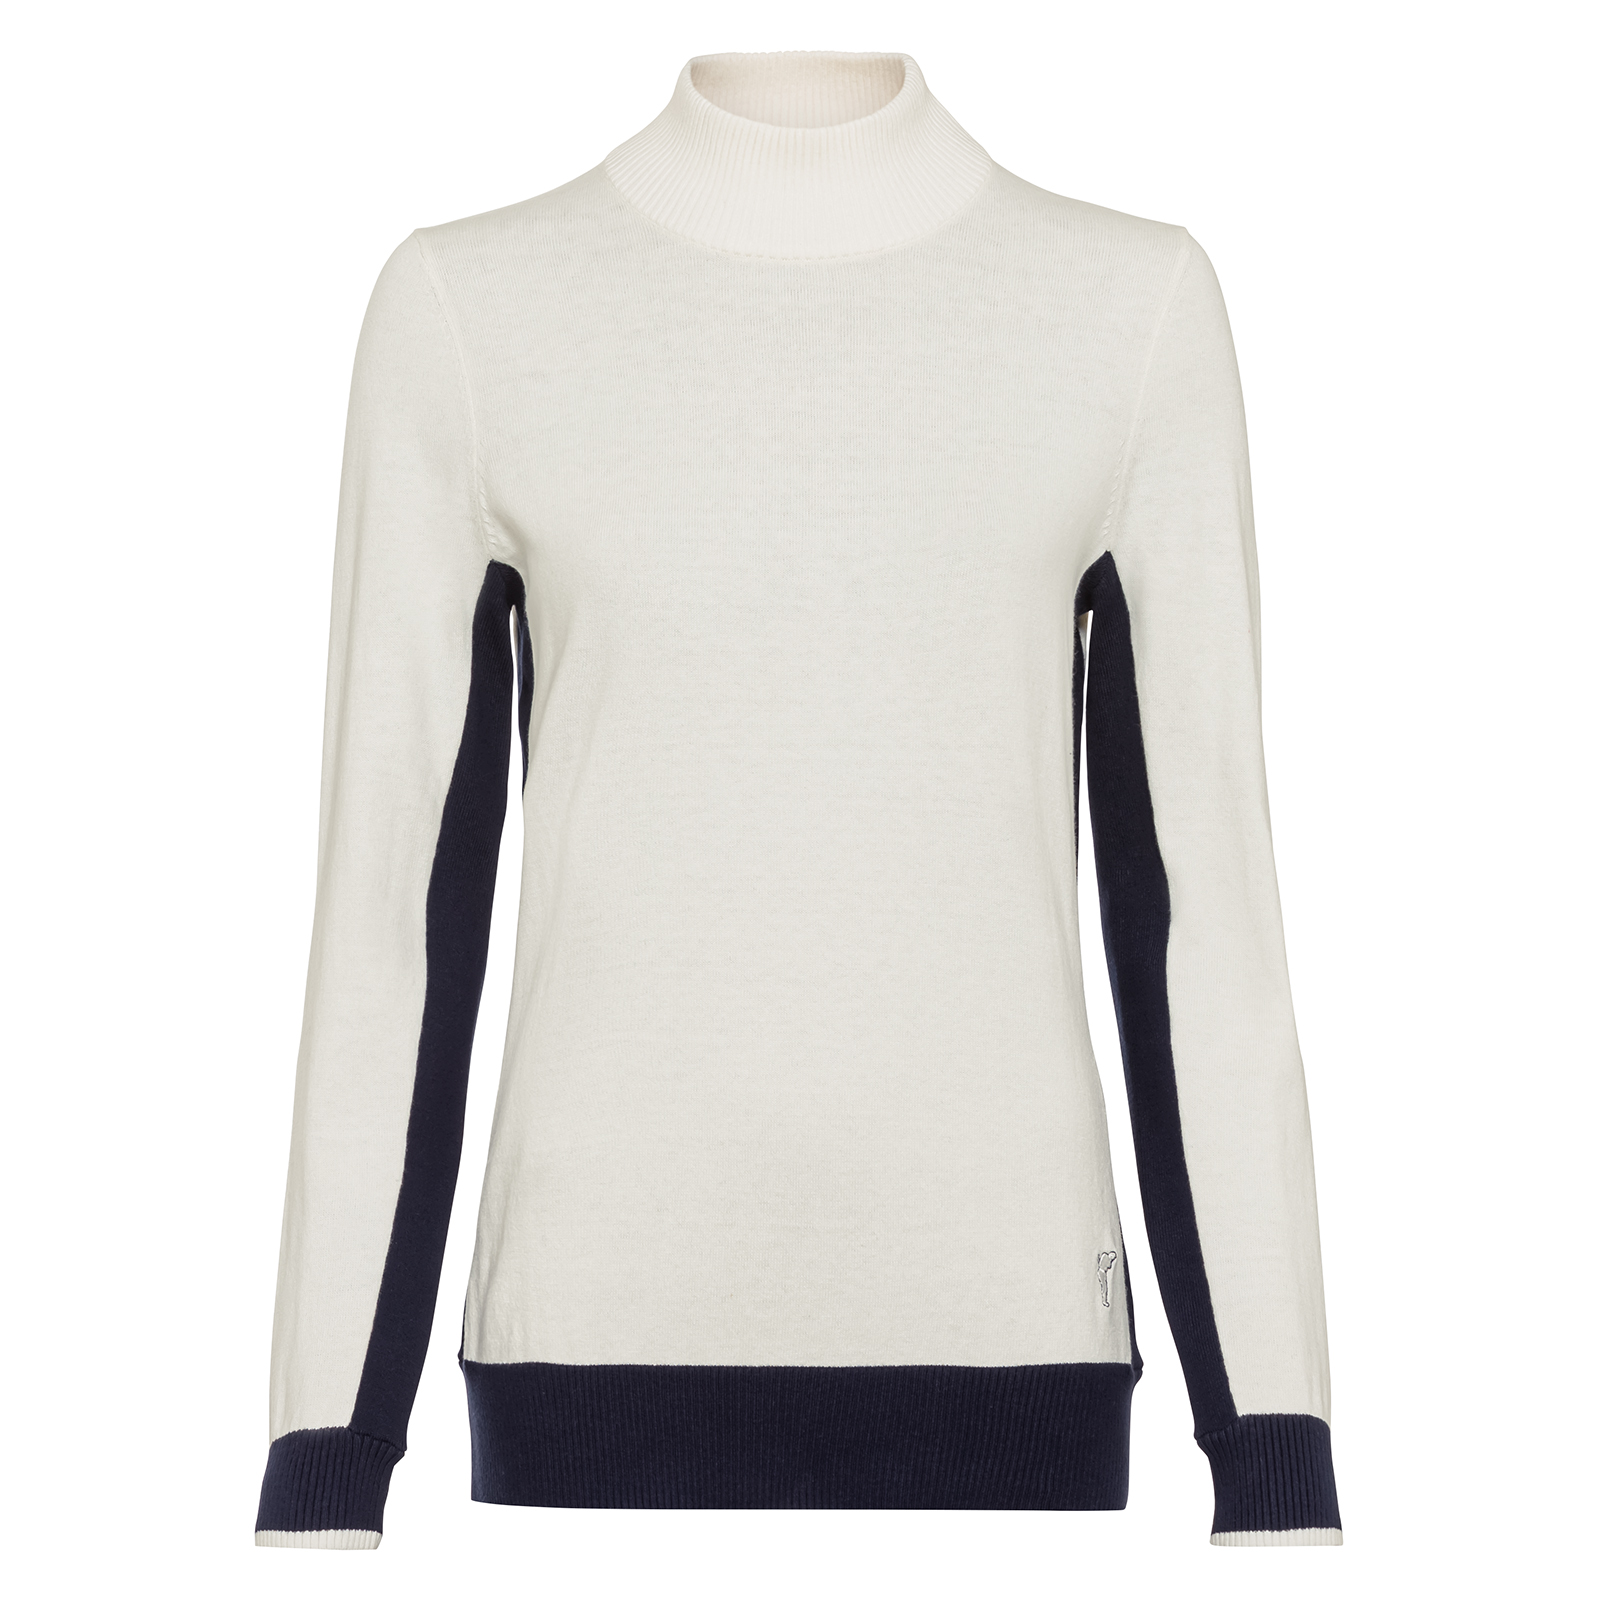 Ladies' elegant turtle-neck sweater with cashmere